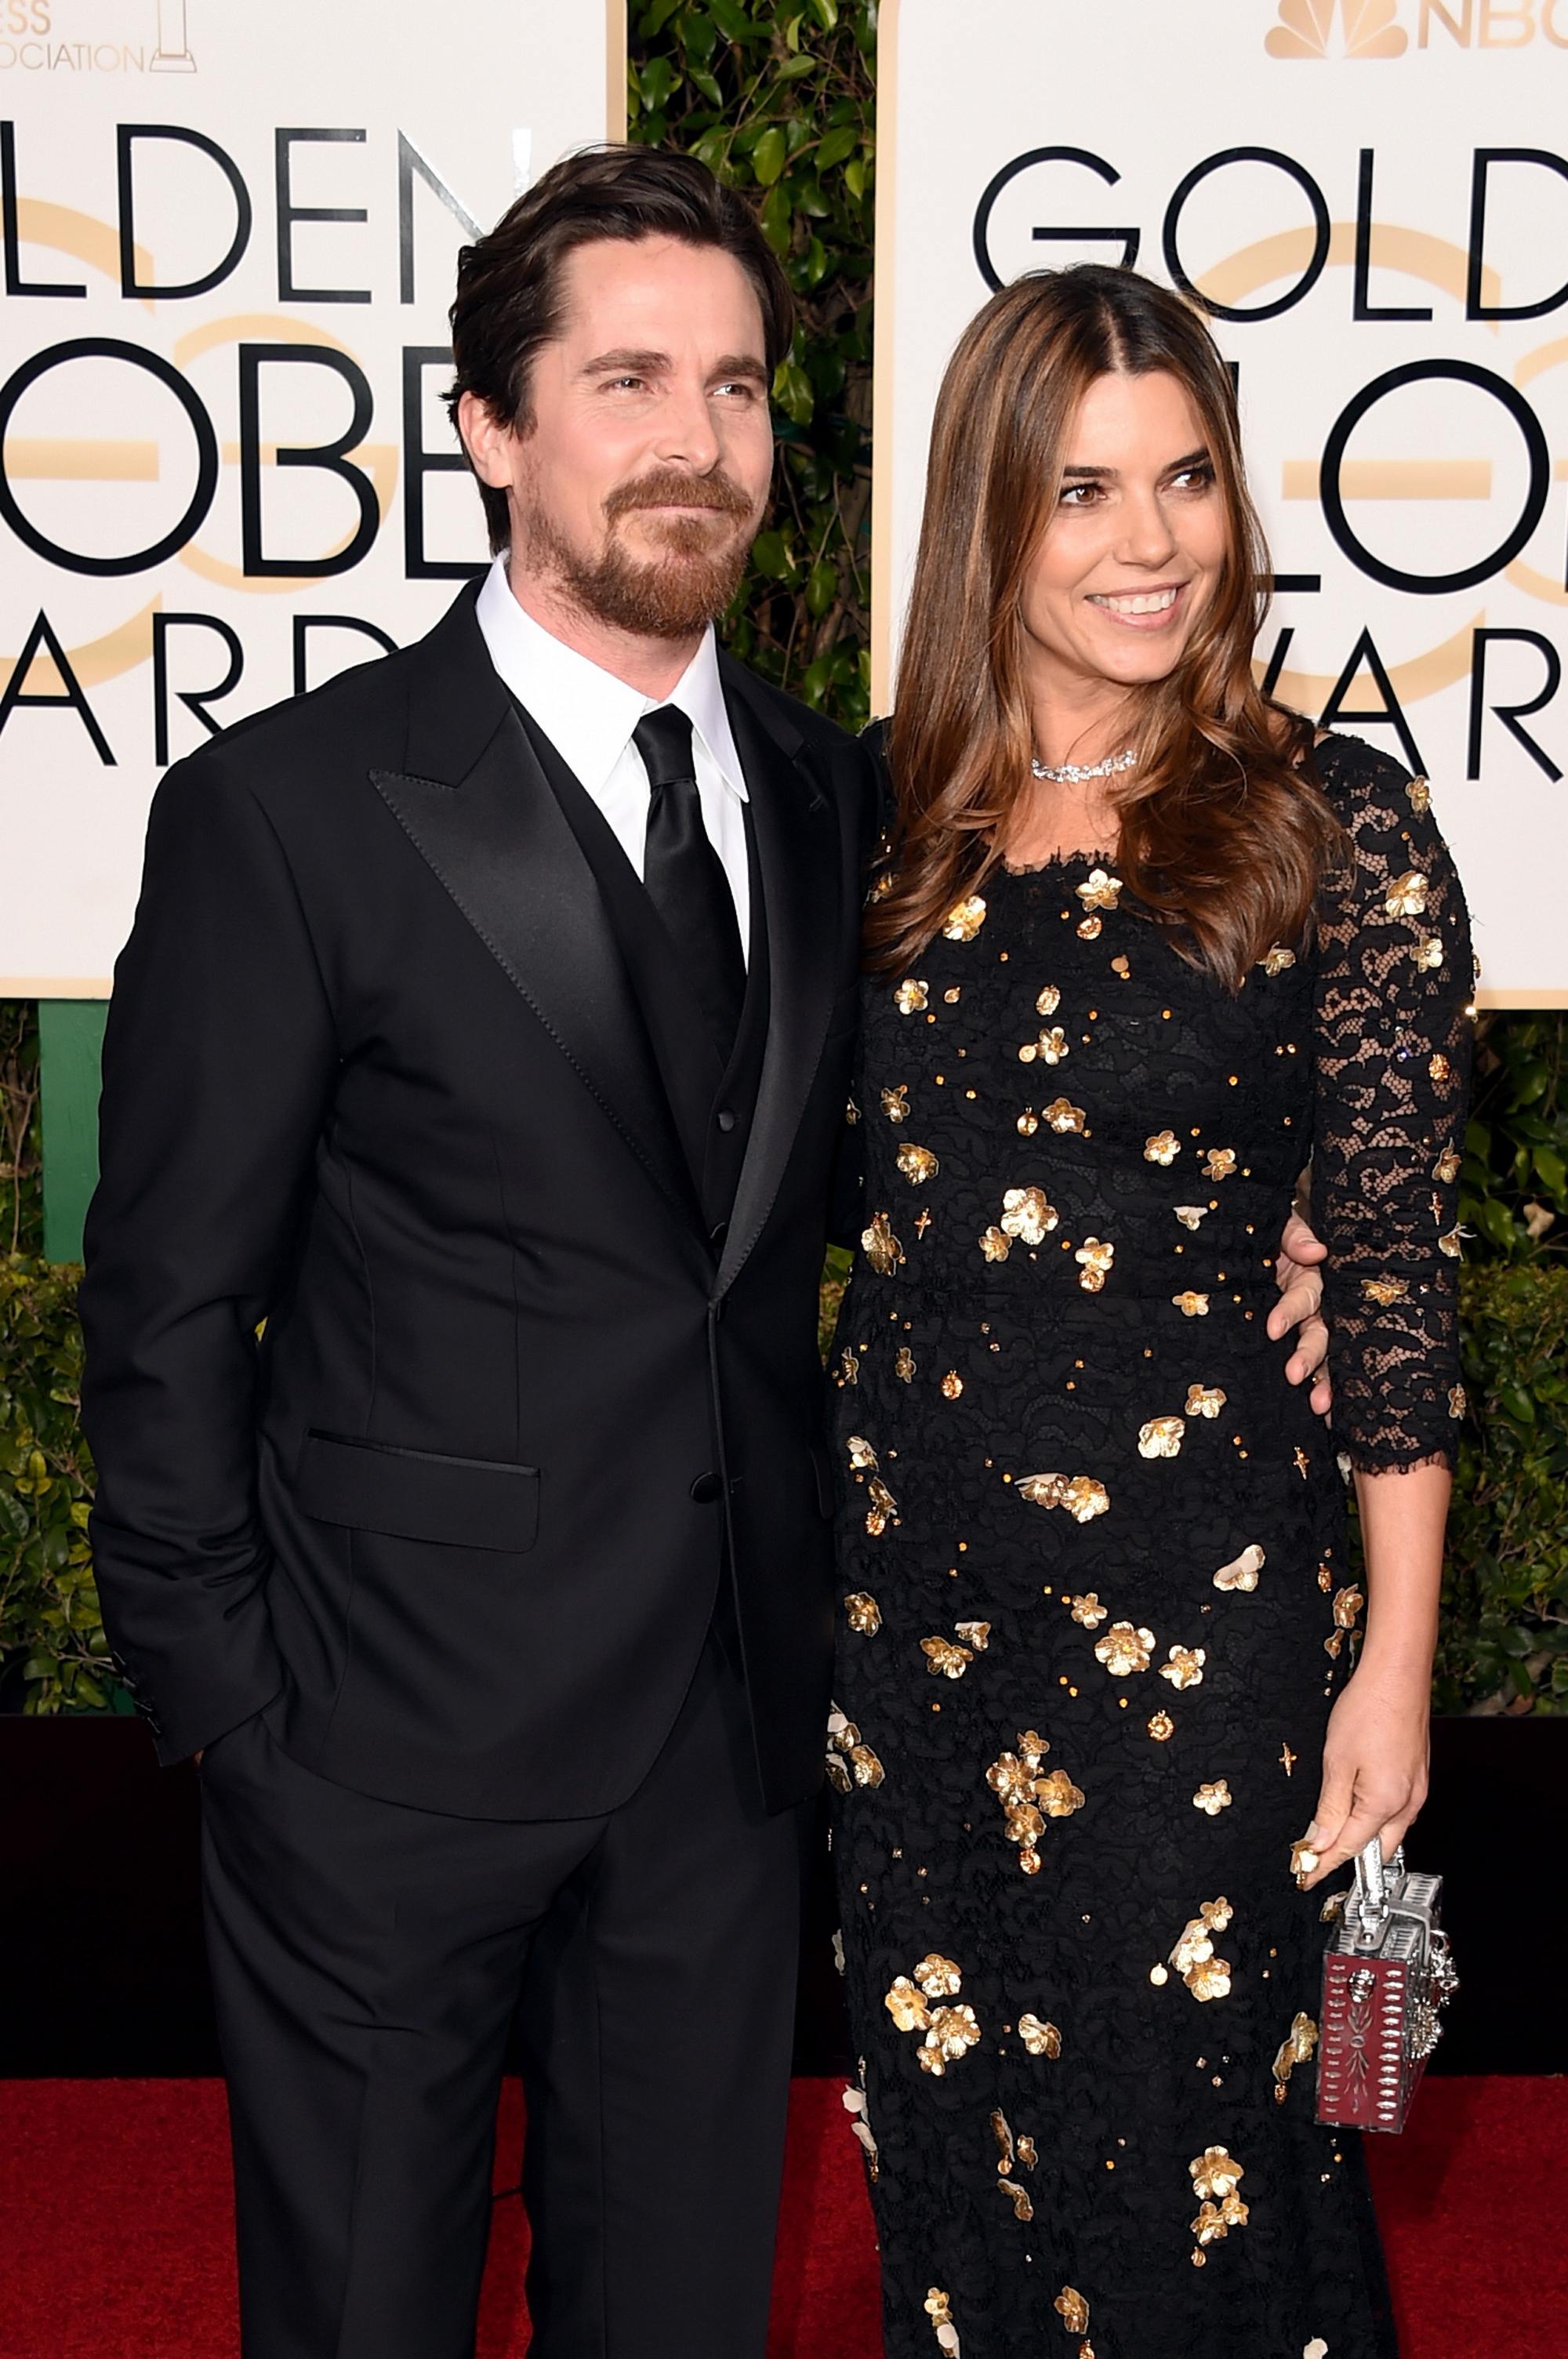 Christian Bale at Annual Golden Globe Awards